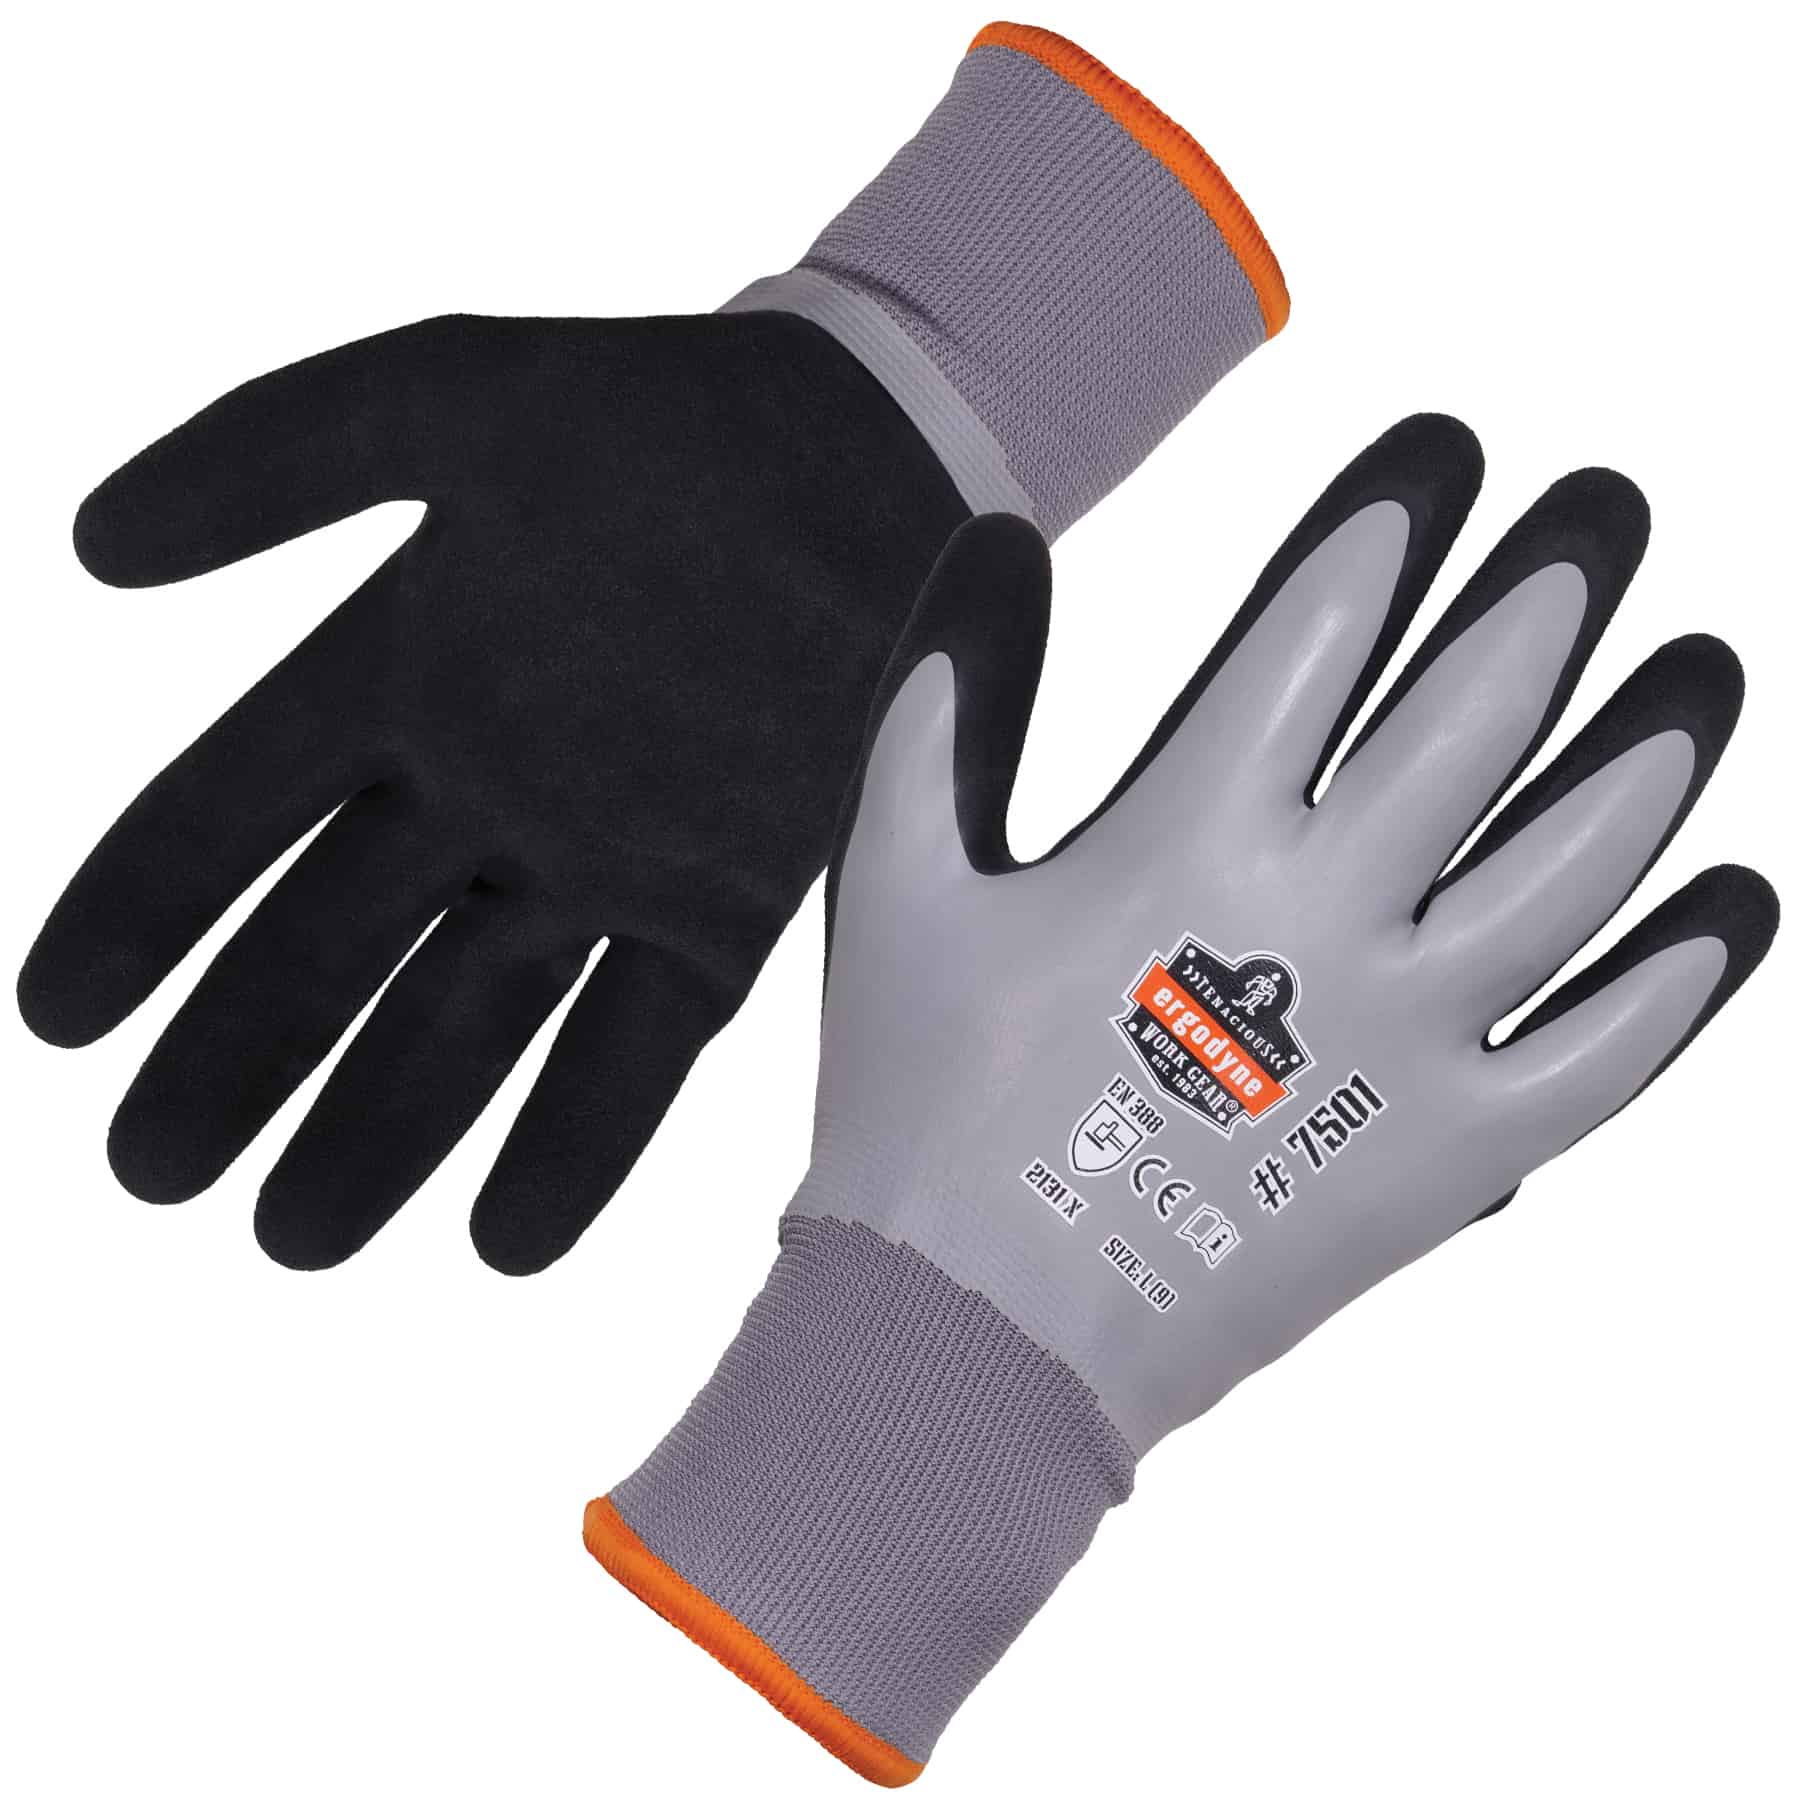 https://www.ergodyne.com/sites/default/files/product-images/17632-7501-coated-waterproof-winter-work-glove-pair_1.jpg